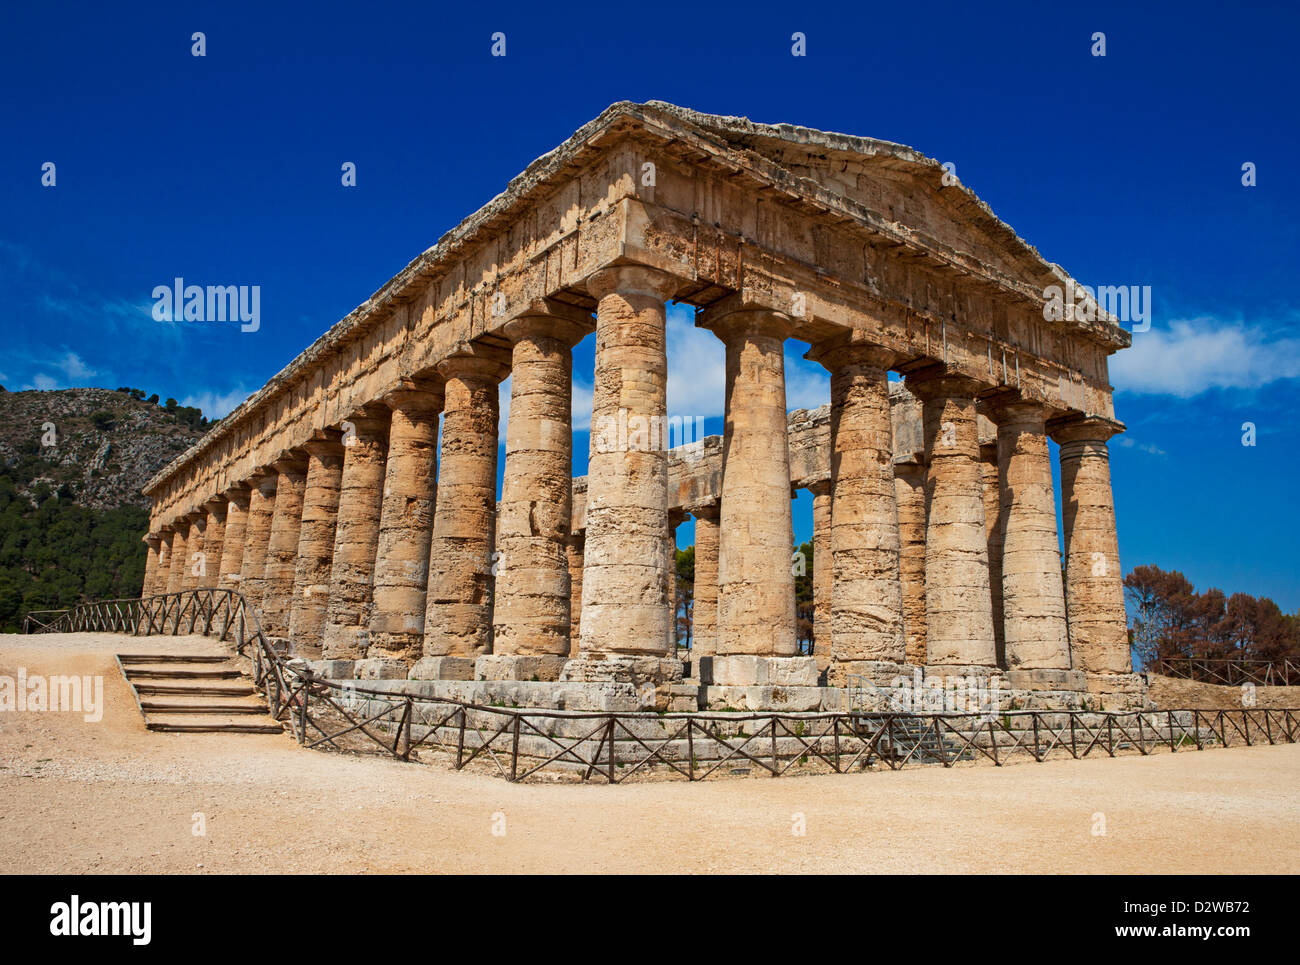 The Doric temple of Segesta near Trapani in Sicily, Italy. Stock Photo